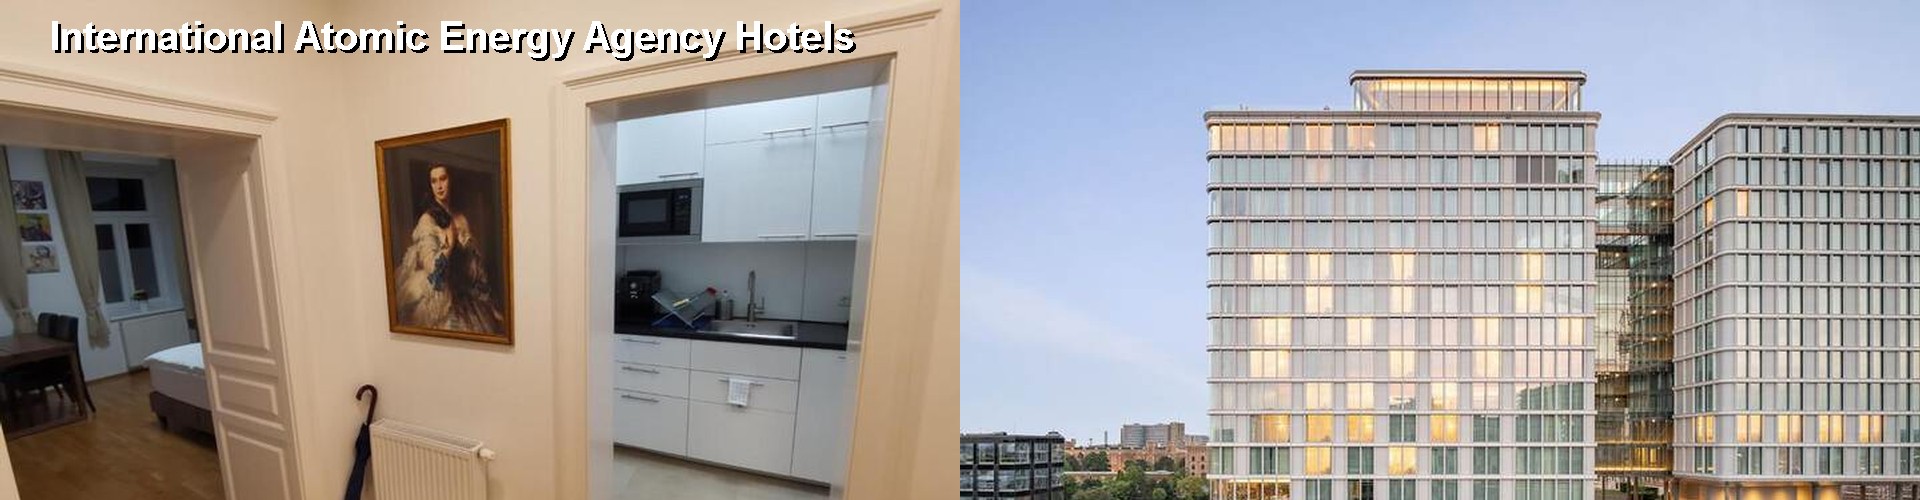 5 Best Hotels near International Atomic Energy Agency